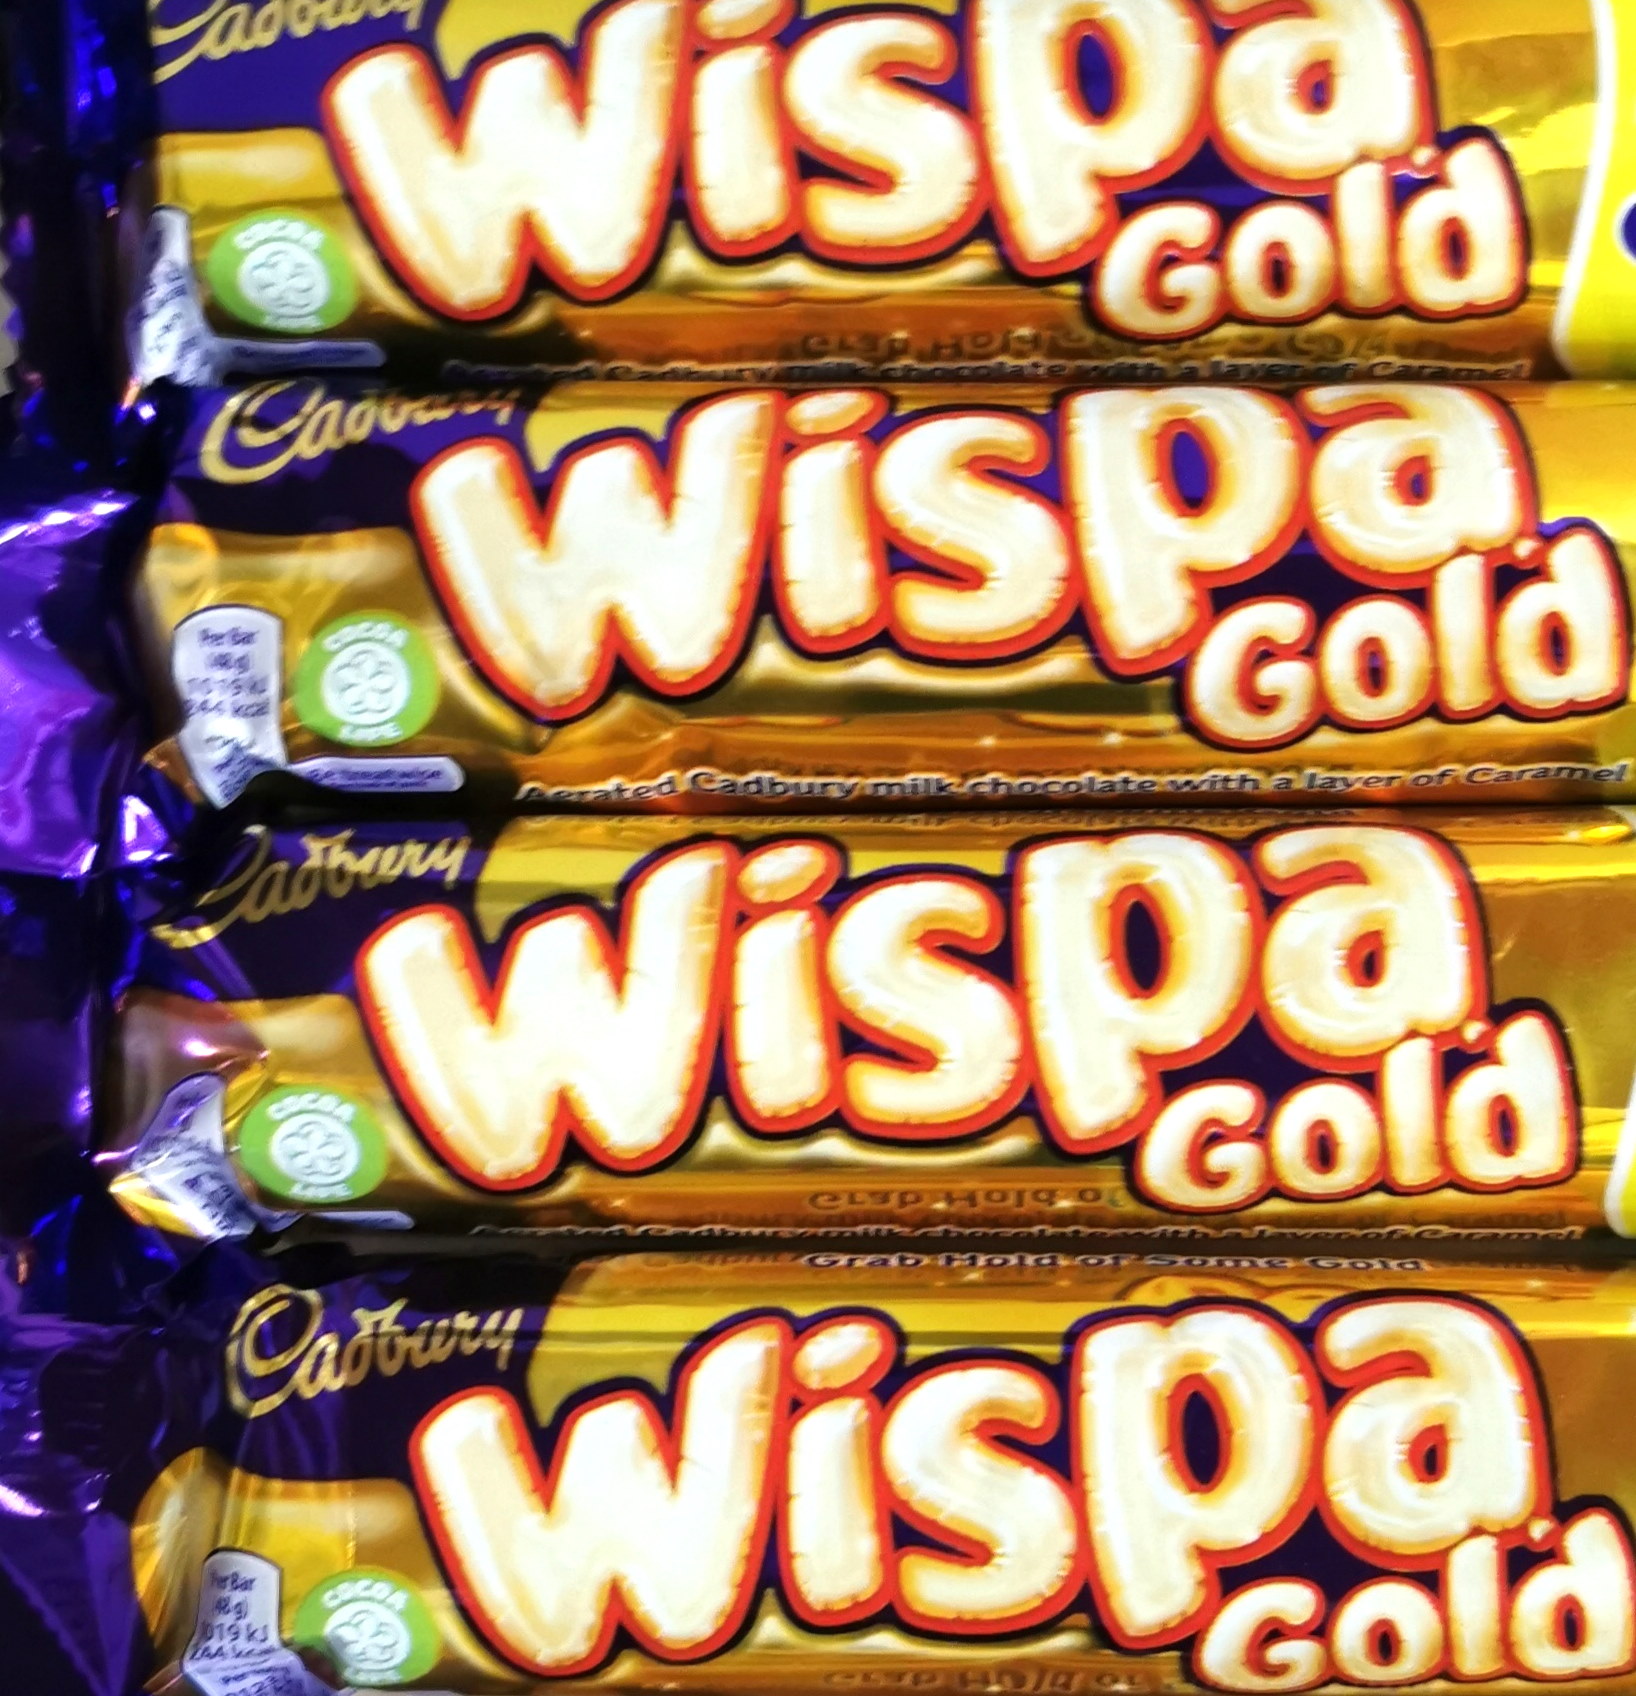 cadbury-wispa-gold-48g-60p-pmp-sweets-shop-uk